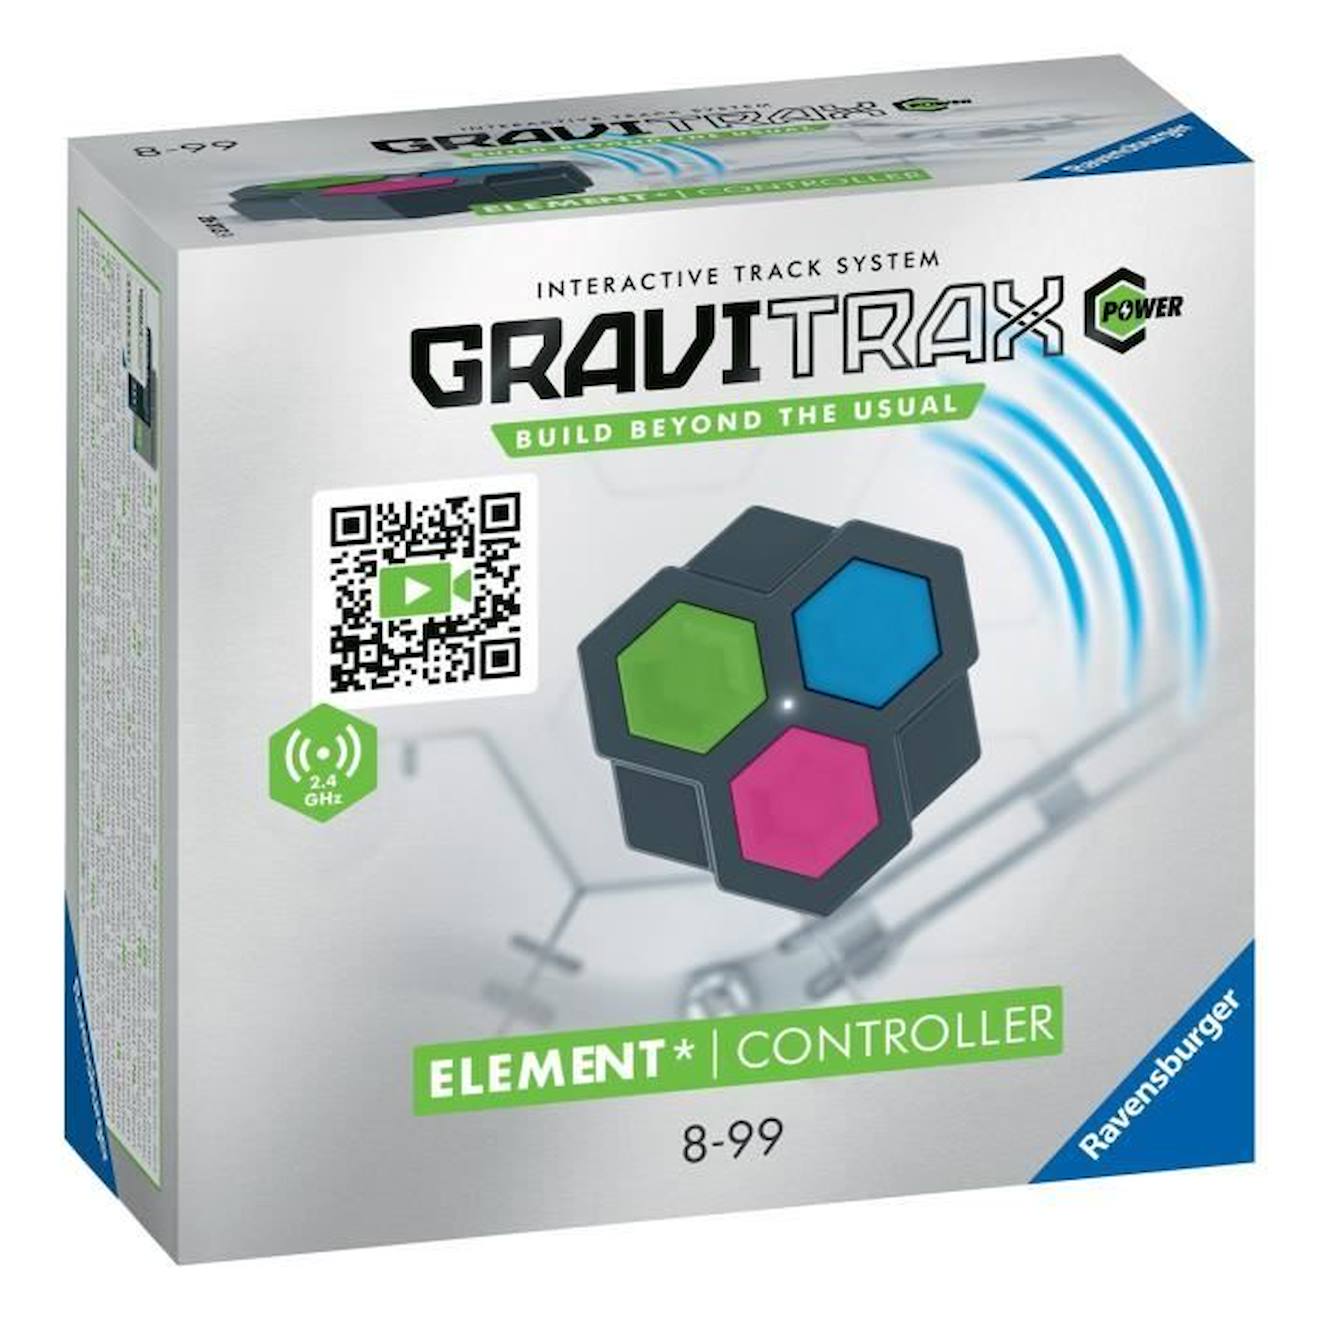 Circuit de billes créatifs Gravitrax POWER - Elément Controller -  Ravensburger blanc - Ravensburger